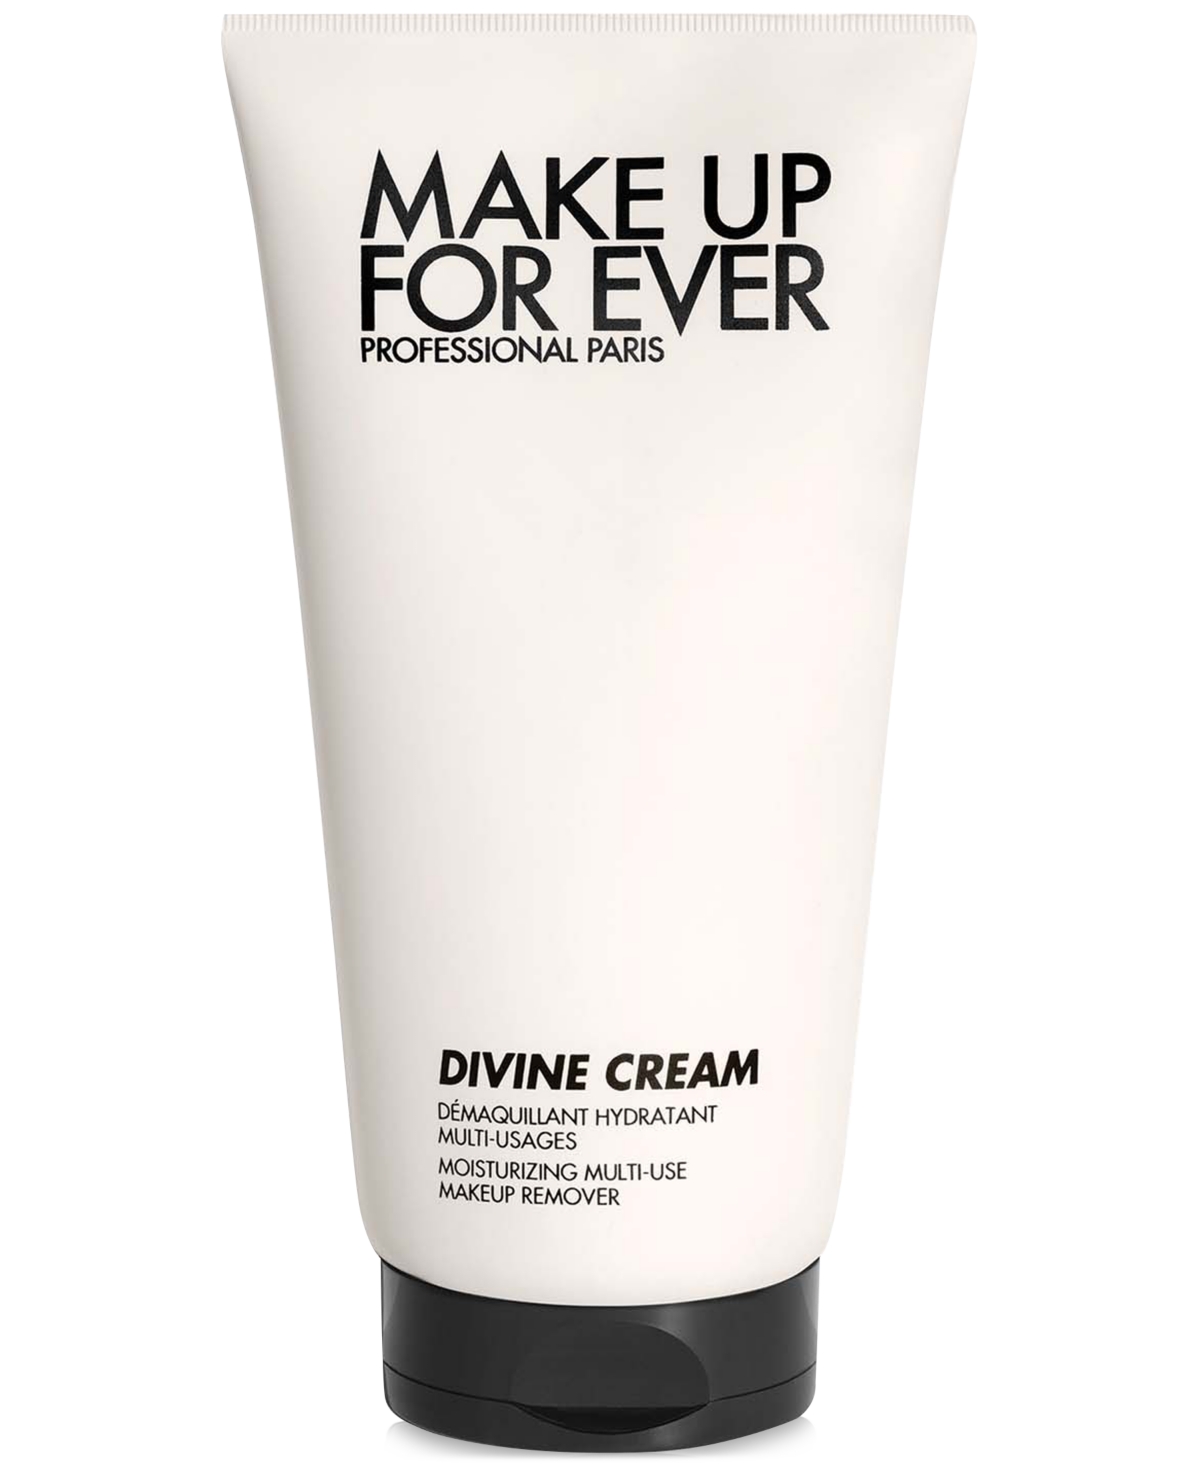 Make Up For Ever Divine Cream Moisturizing Multi-Use Makeup Remover, 5 oz.